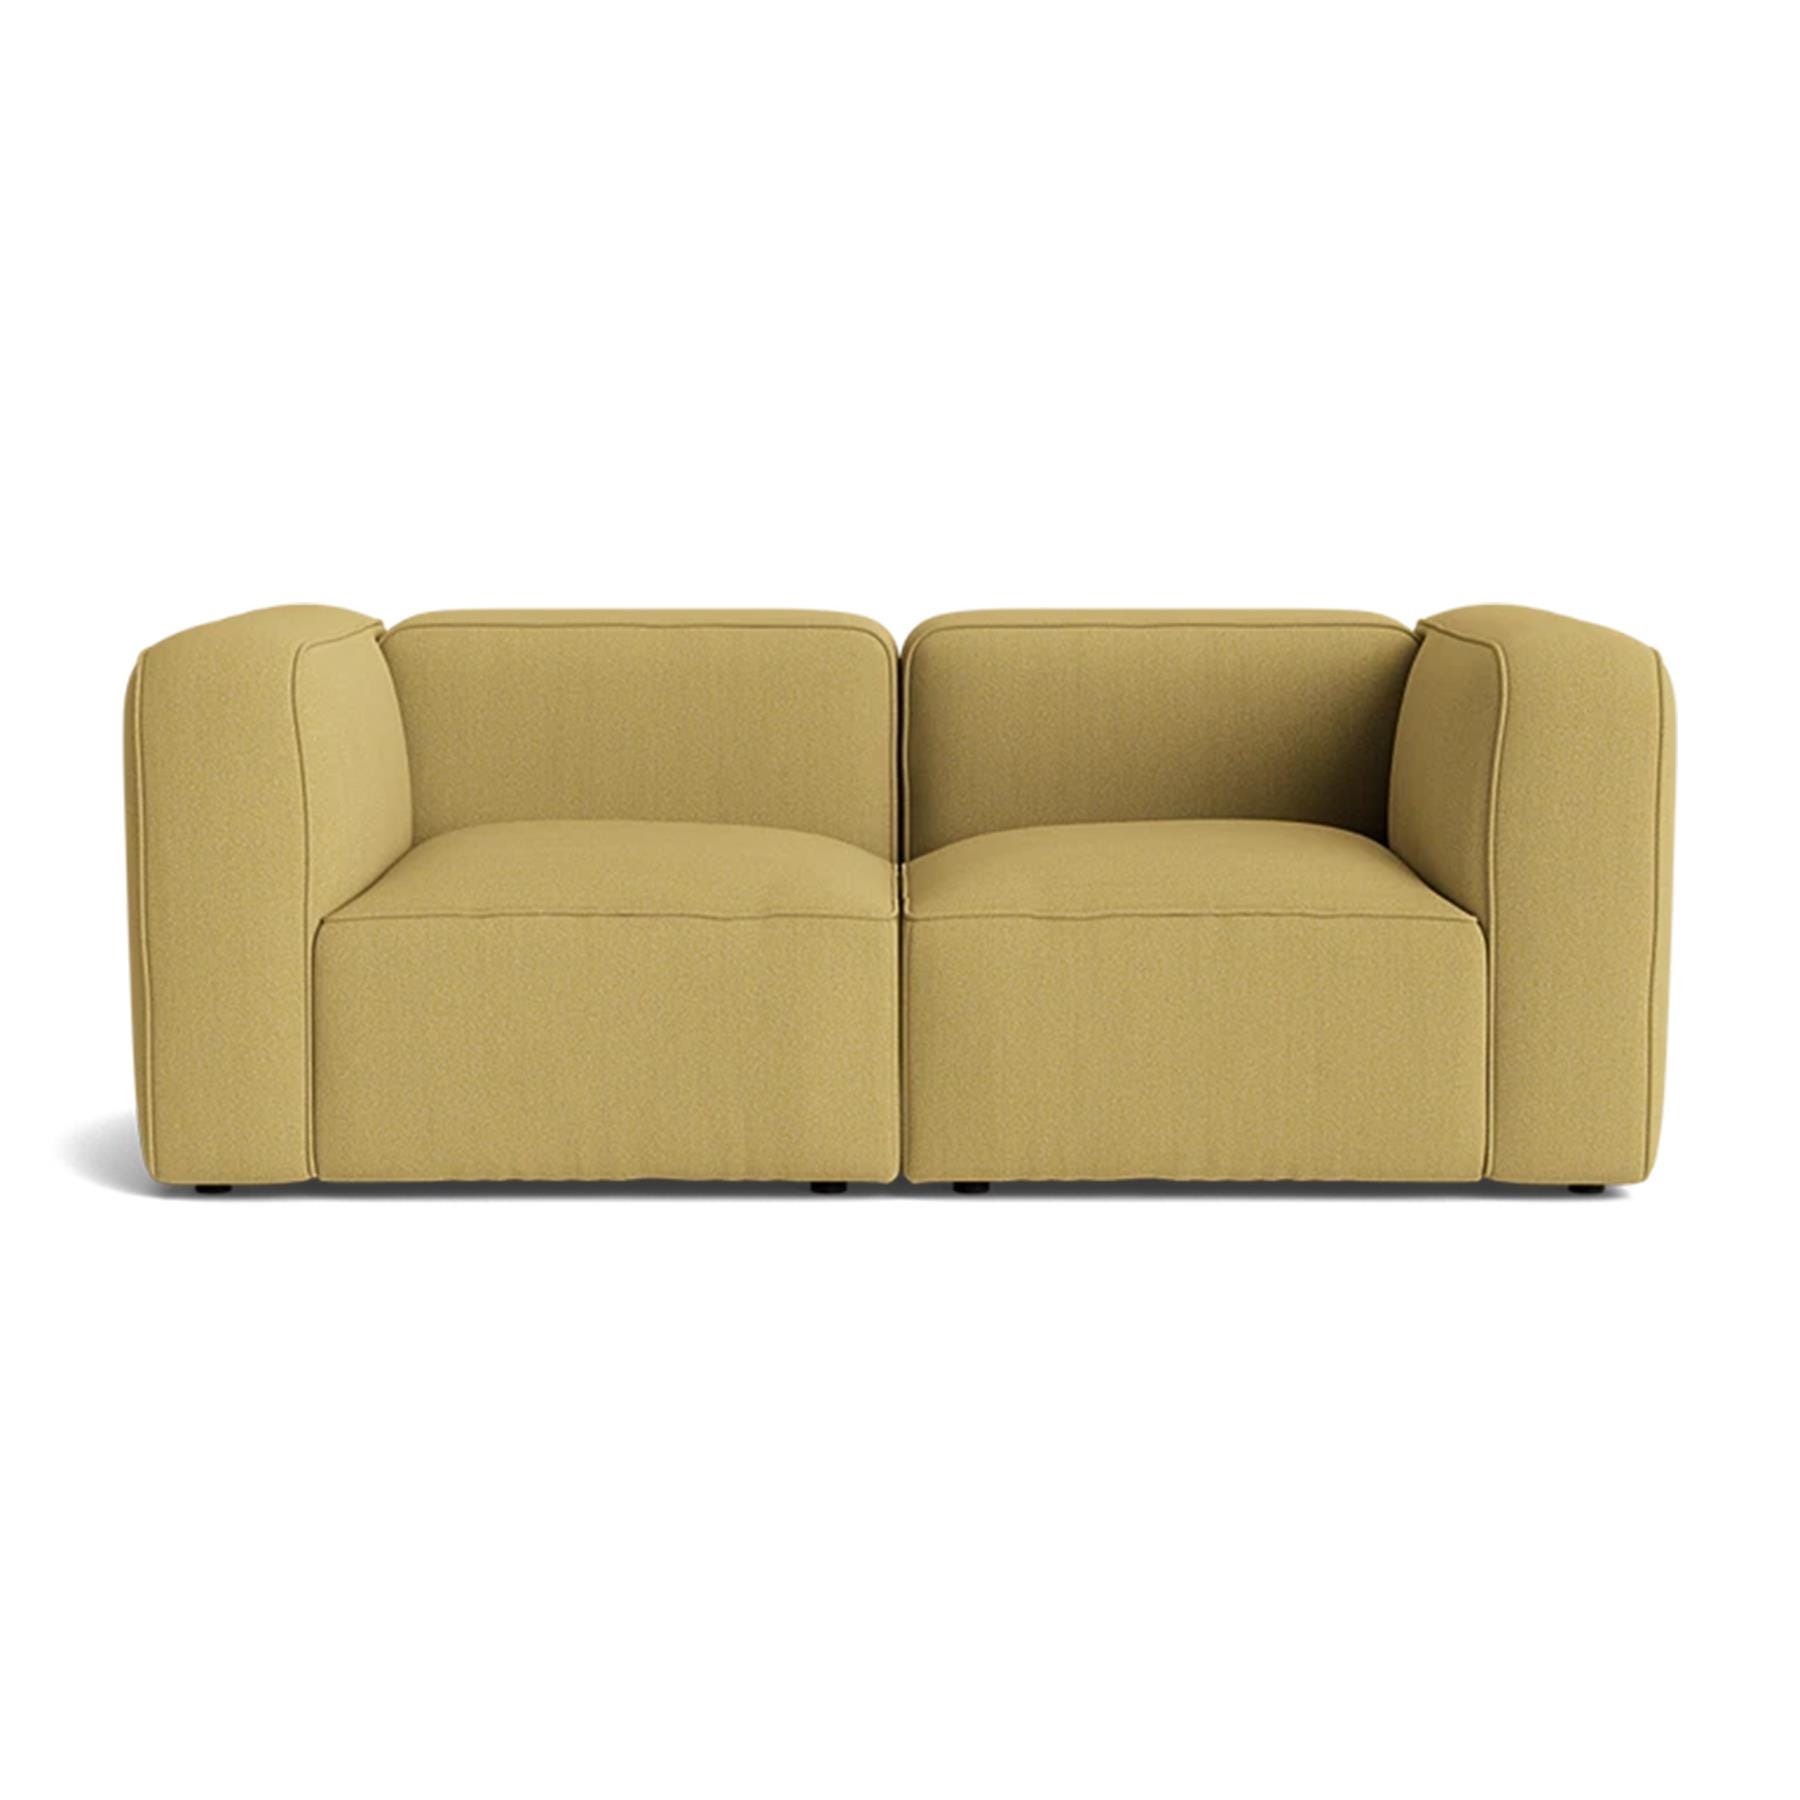 Make Nordic Basecamp 2 Seater Sofa Hallingdal 407 Yellow Designer Furniture From Holloways Of Ludlow